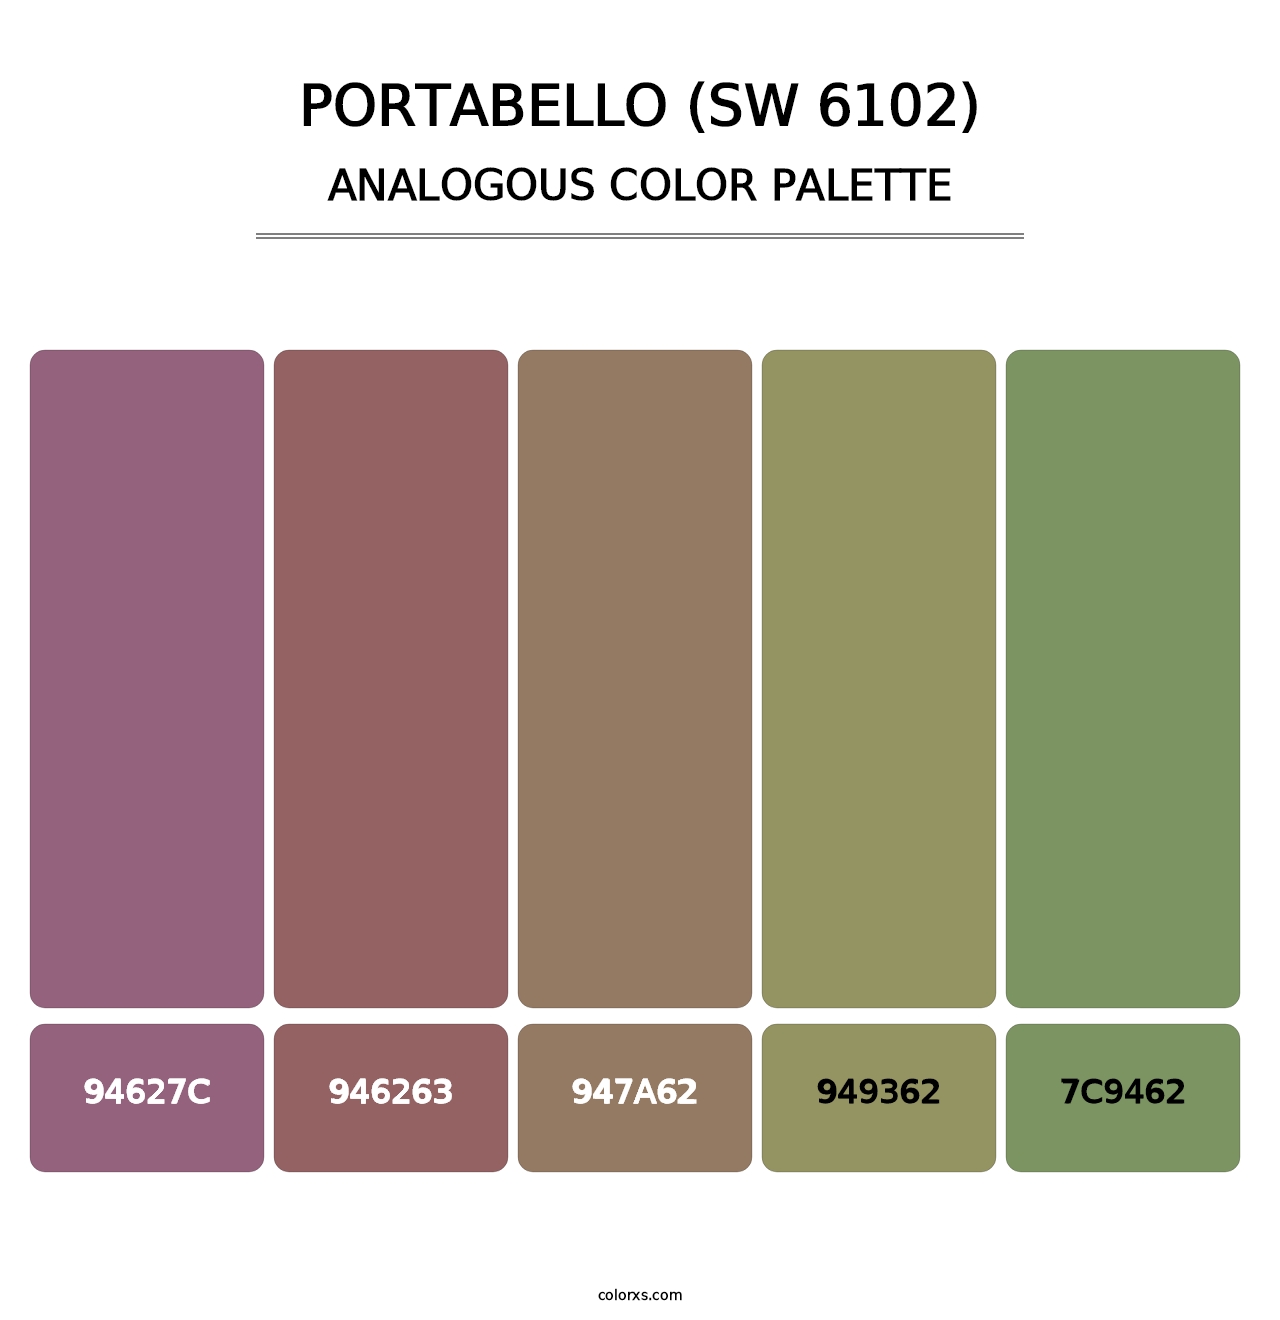 Portabello (SW 6102) - Analogous Color Palette